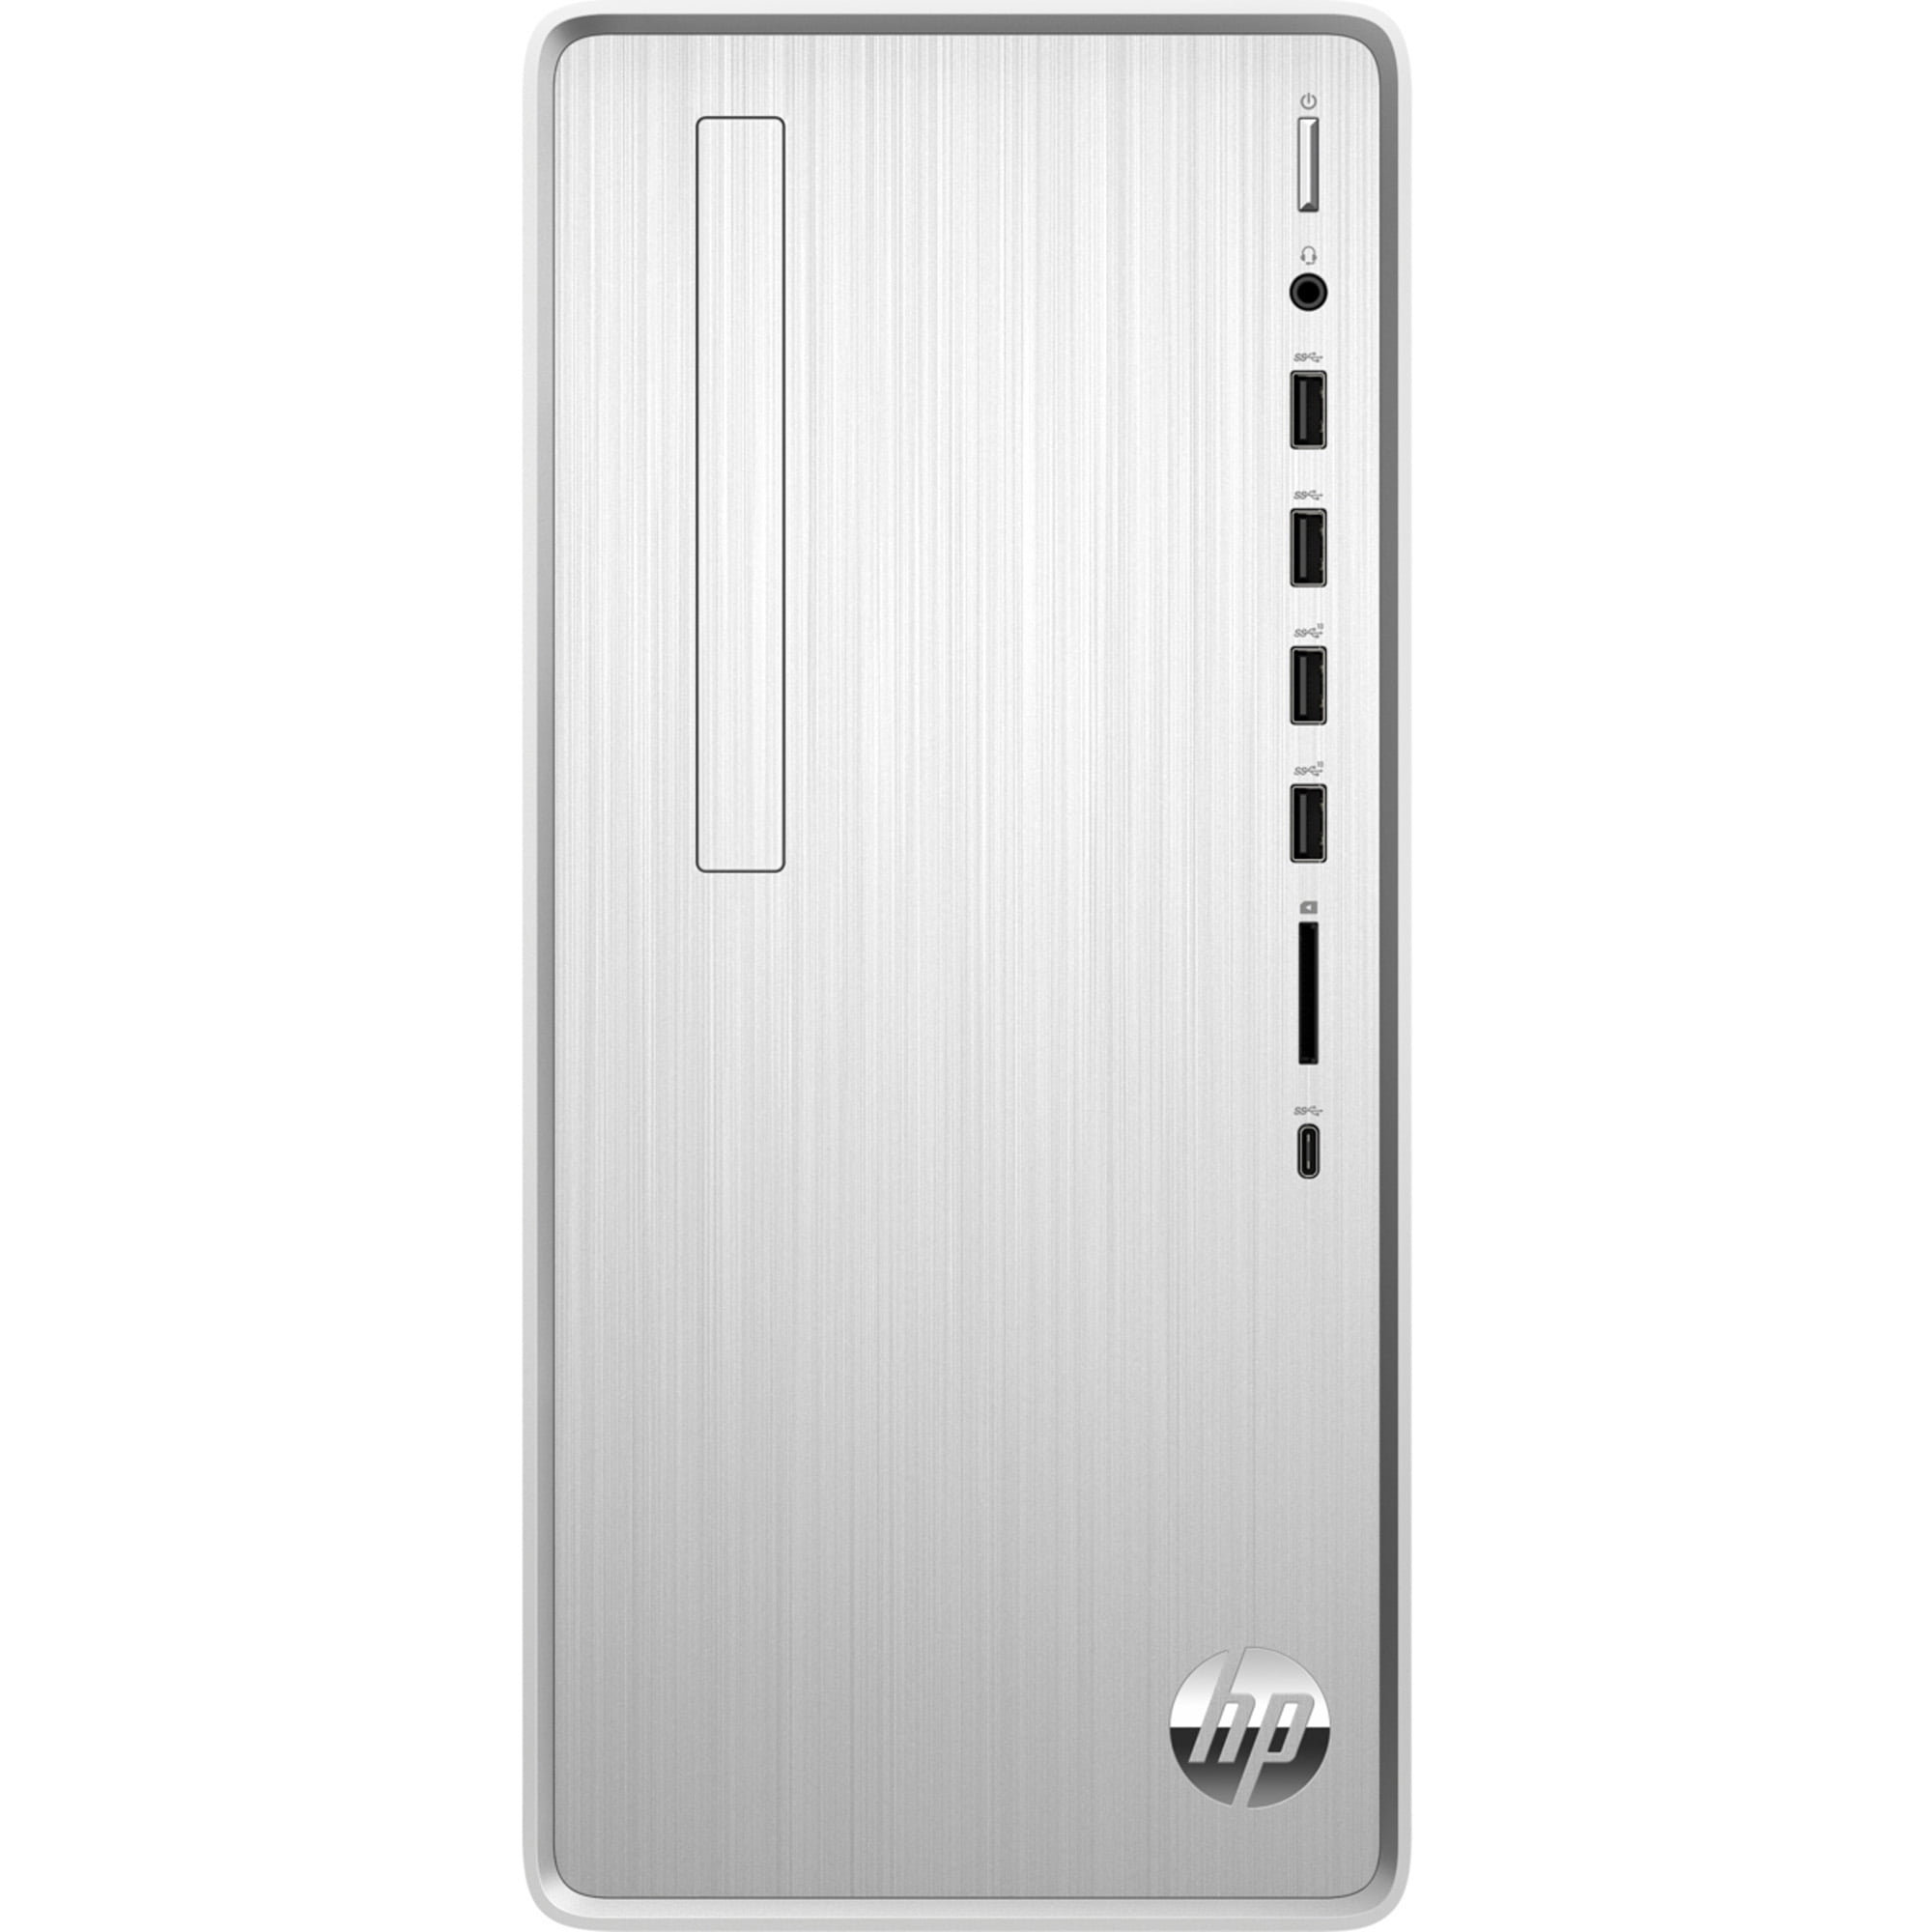 HP Pavilion TP01-2060 Desktop, AMD Ryzen 7, 16GB RAM, 1TB HDD